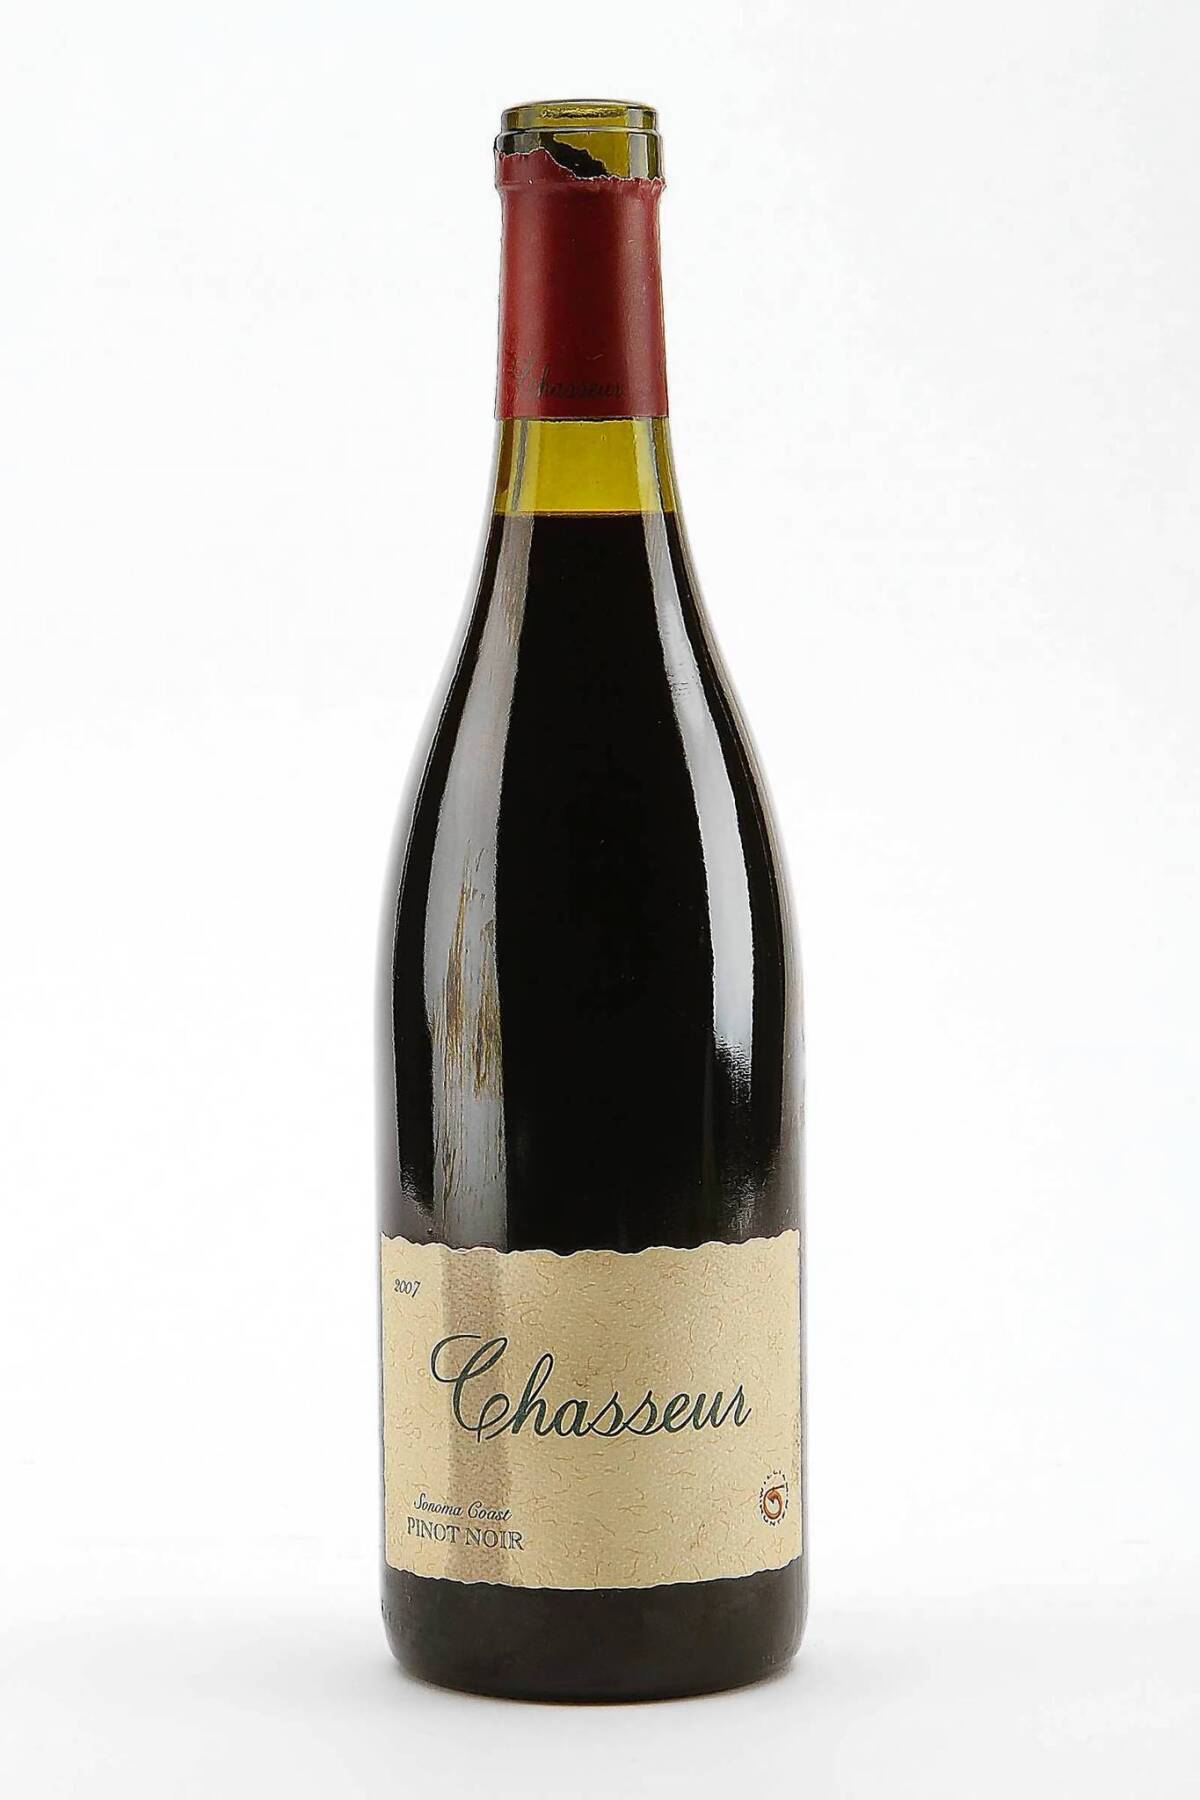 2007 Chasseur Pinot Noir ‘Sonoma Coast’